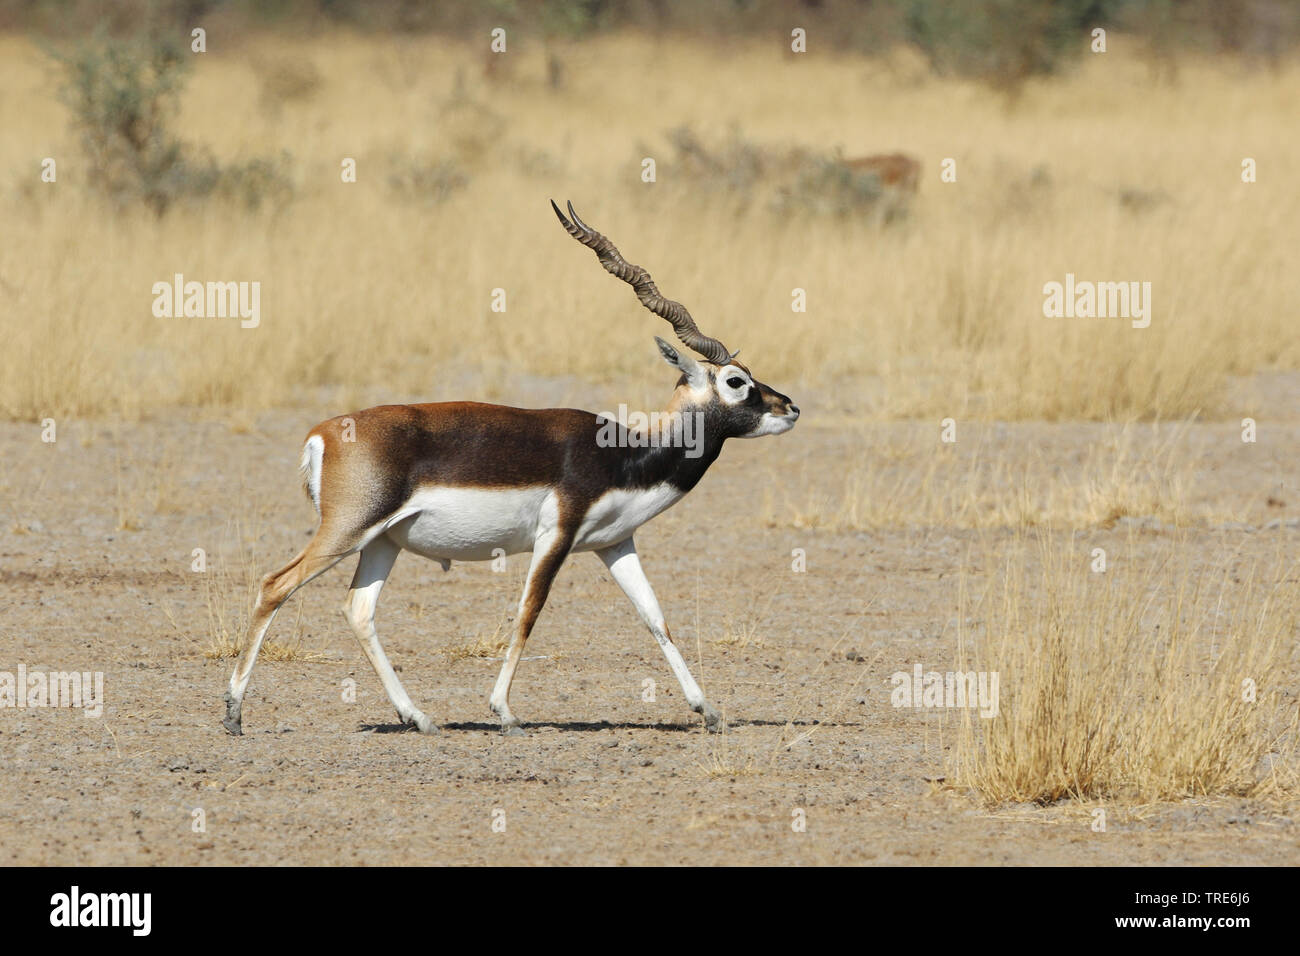 blackbuck (Antilope cervicapra), buck walking through savanna, India, Tal Chhapar Stock Photo